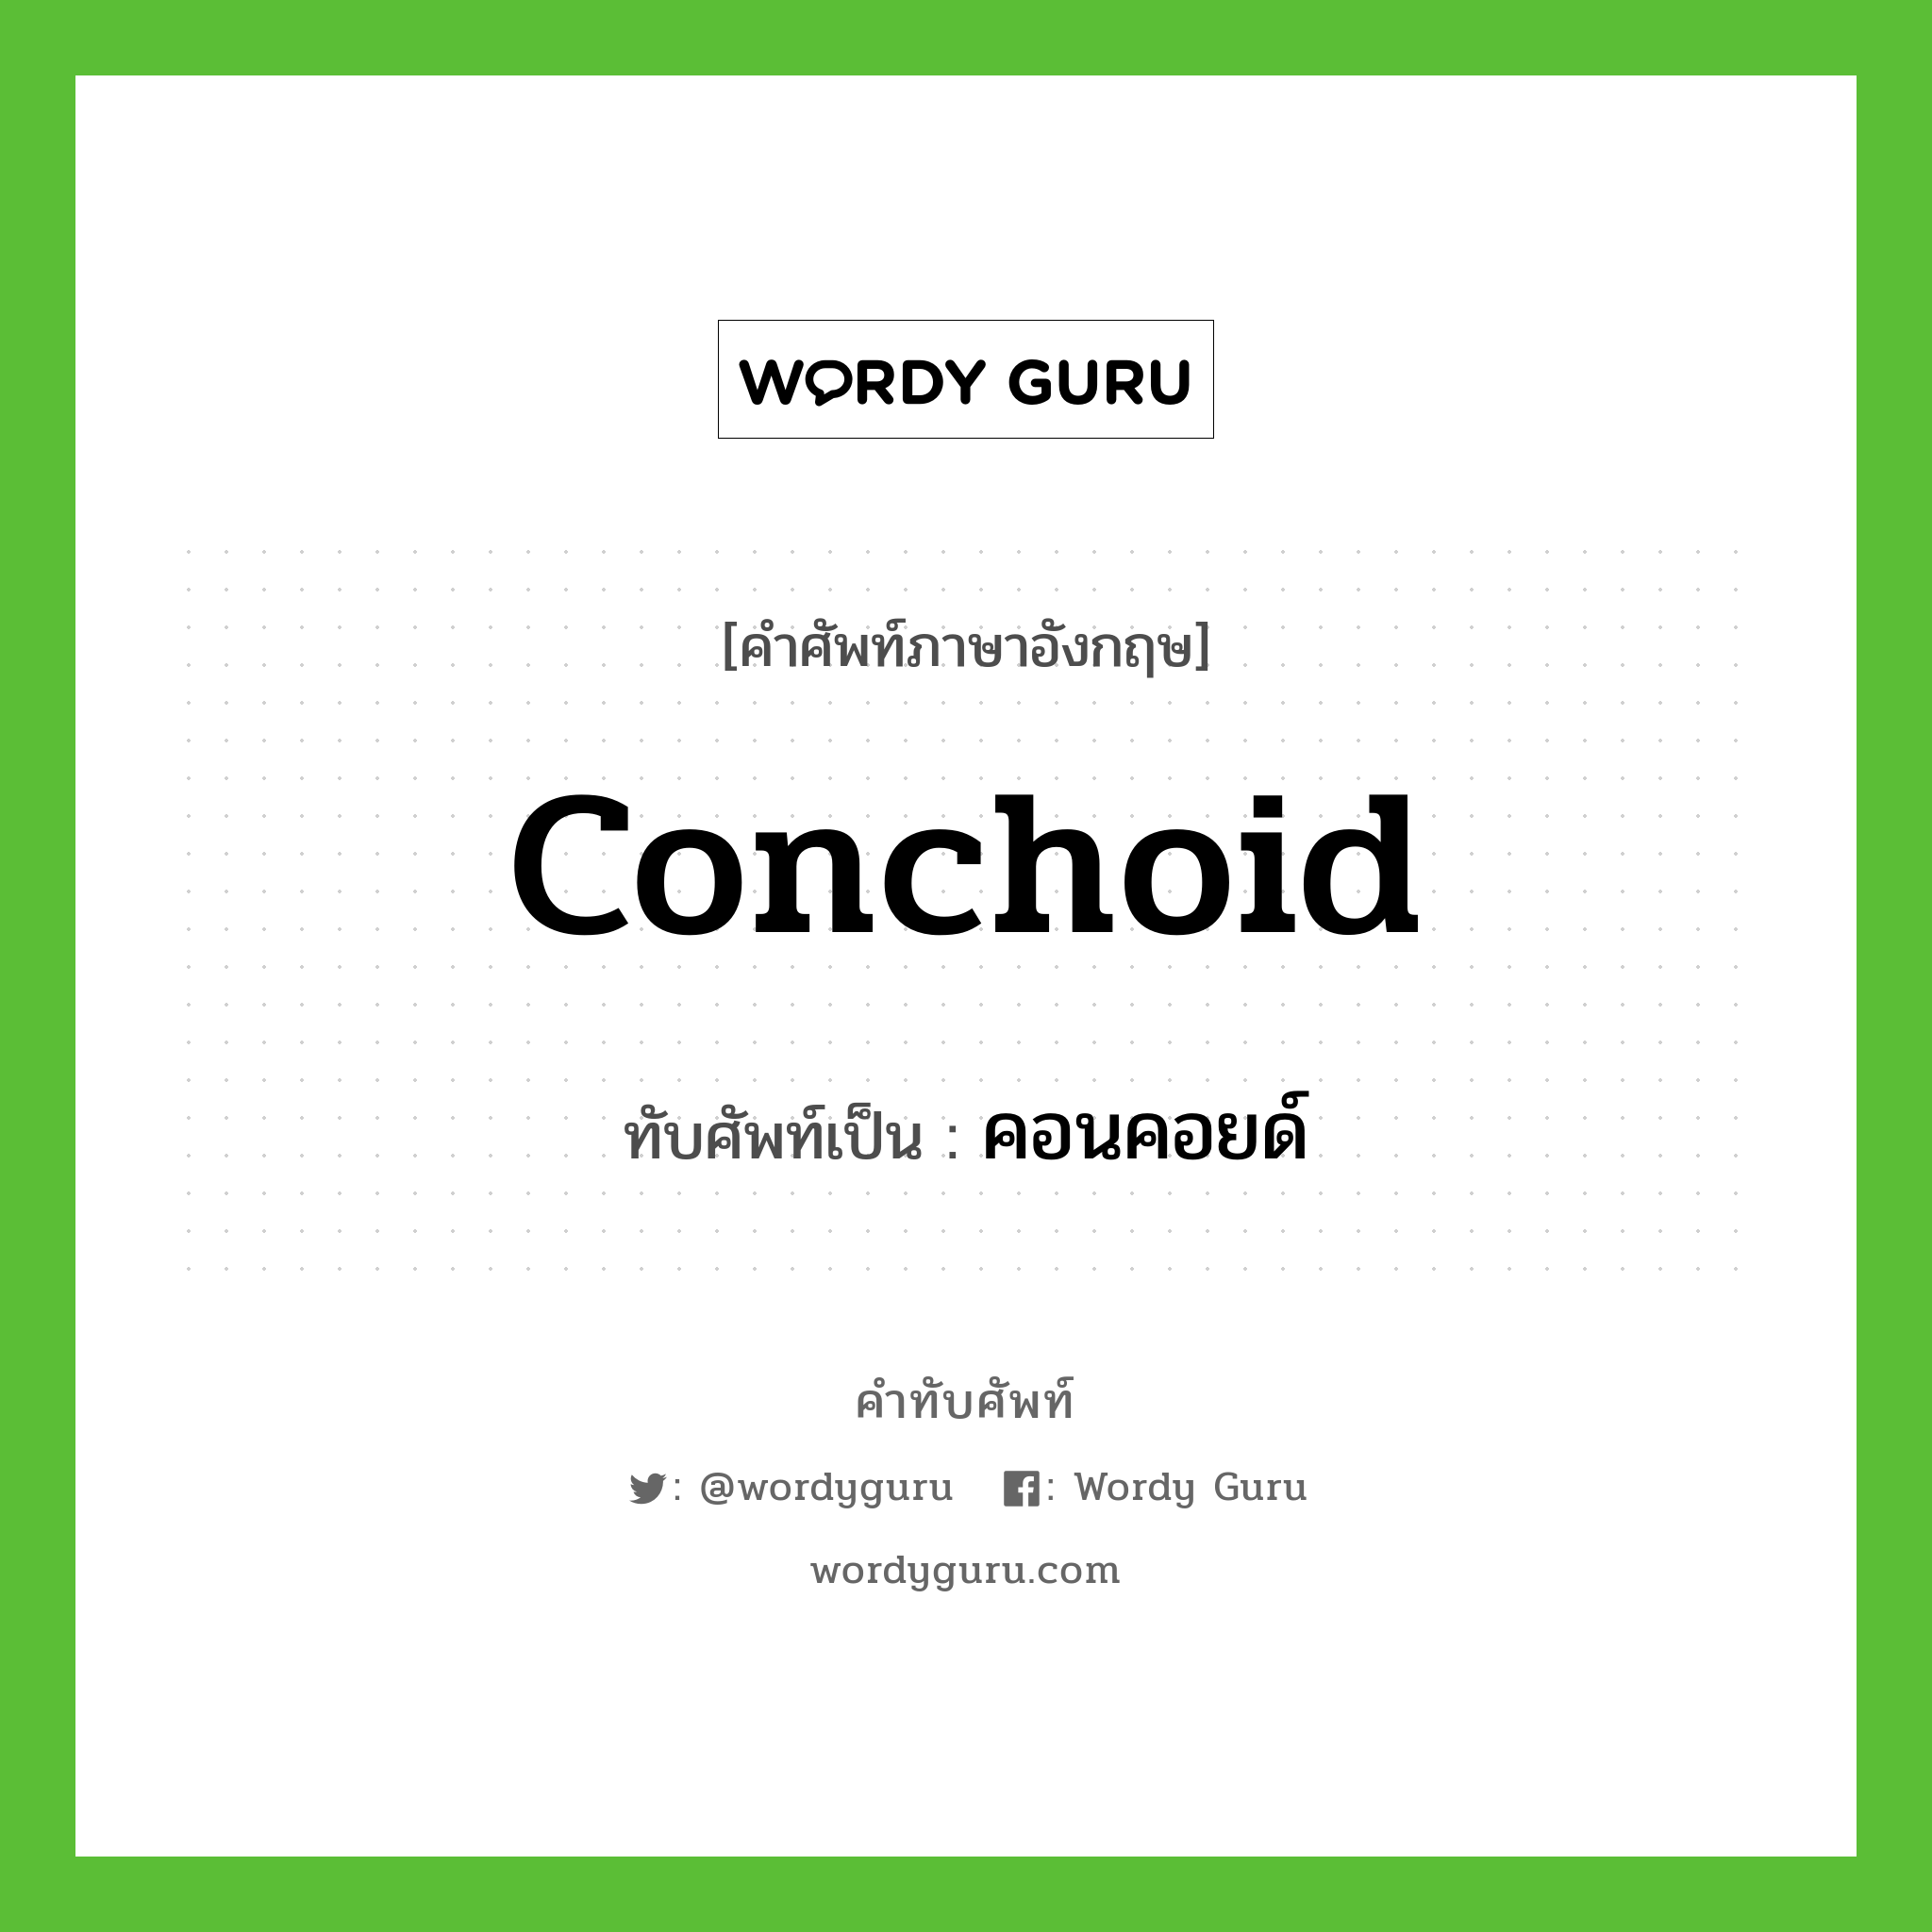 conchoid เขียนเป็นคำไทยว่าอะไร?, คำศัพท์ภาษาอังกฤษ conchoid ทับศัพท์เป็น คอนคอยด์